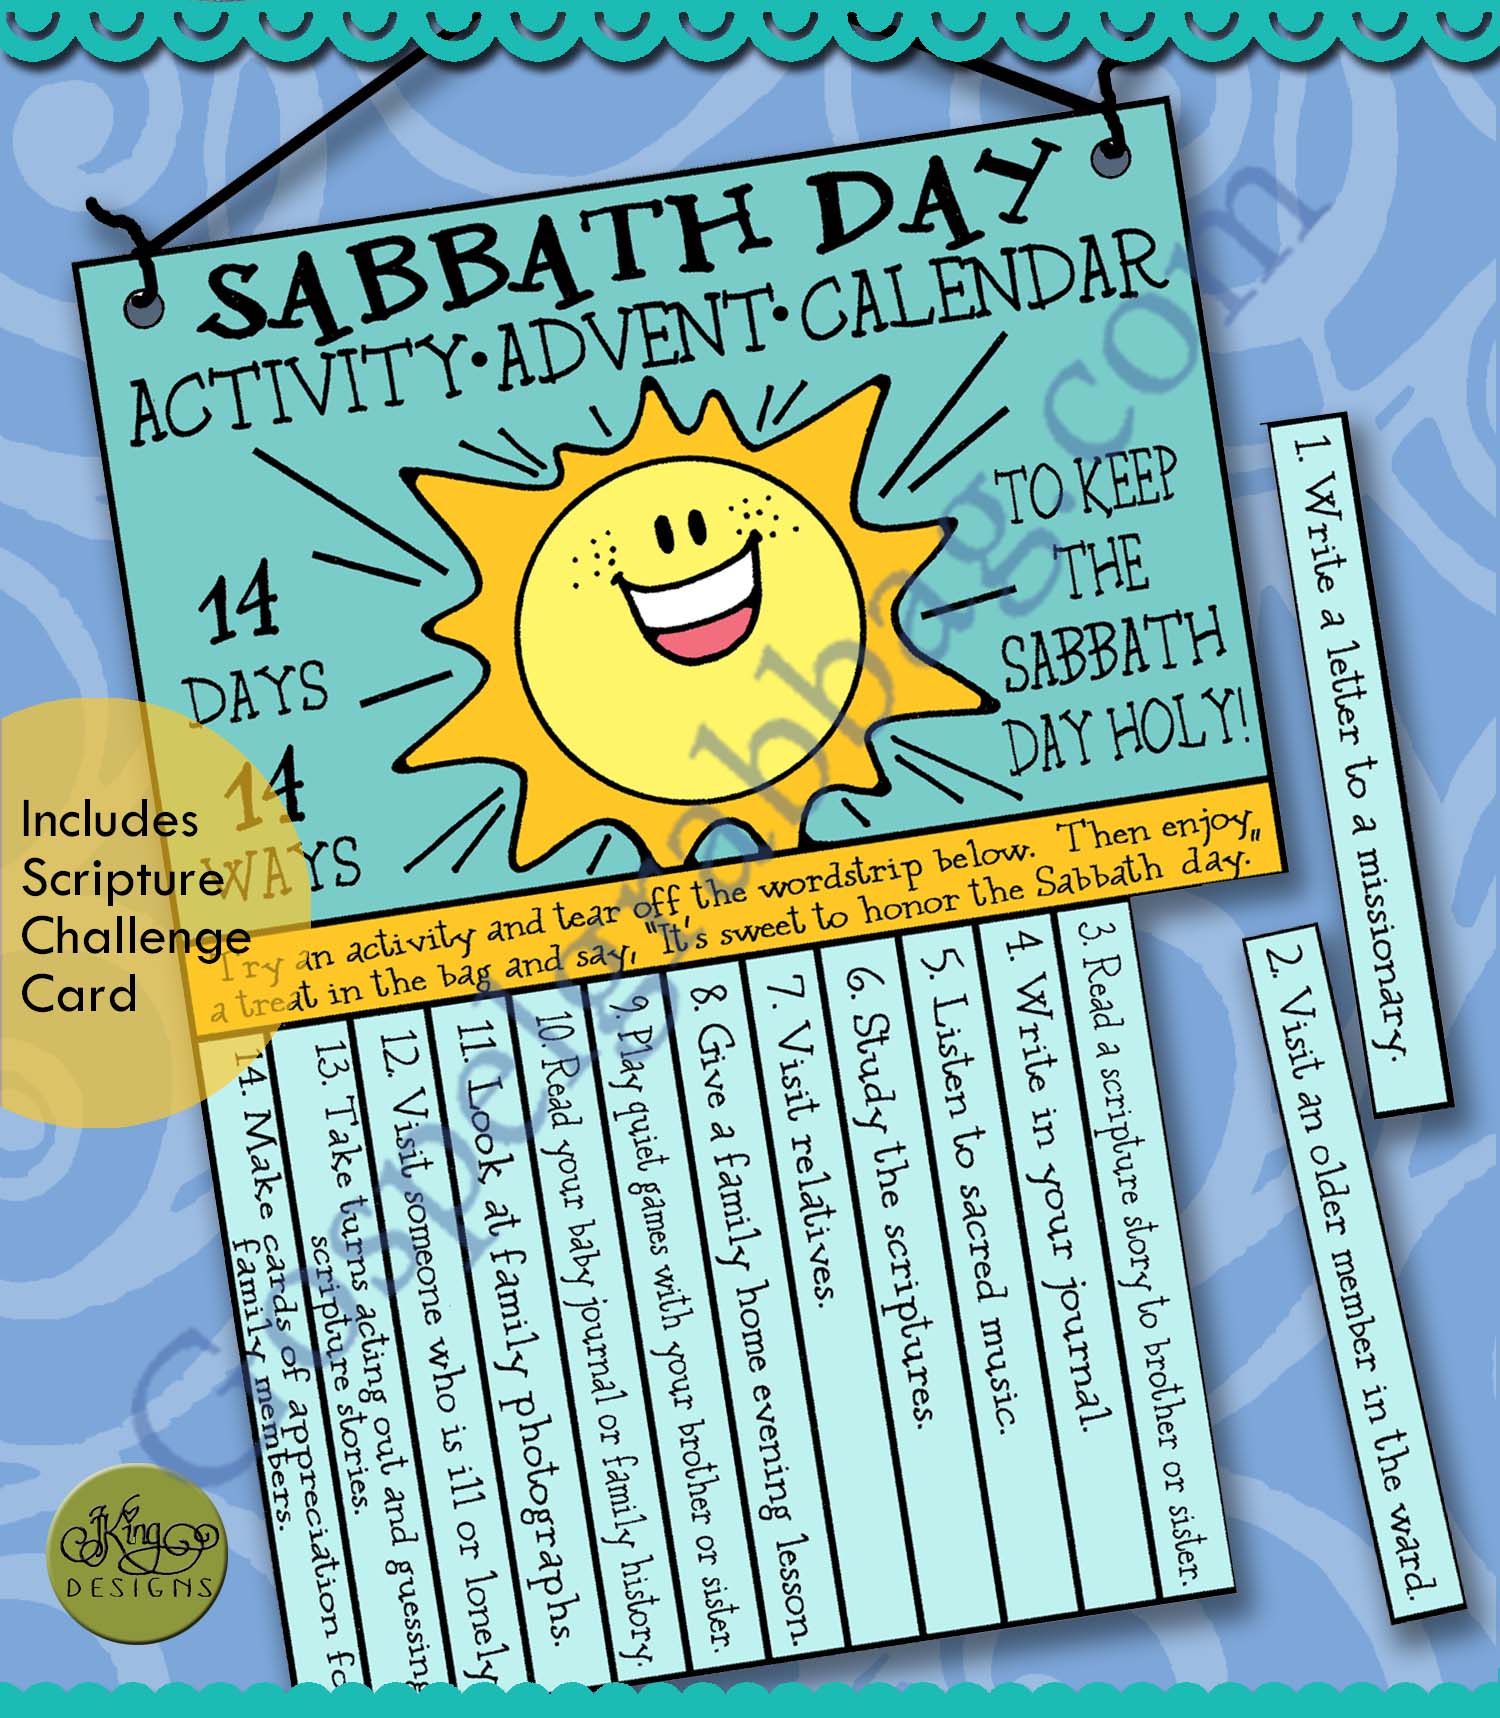 SABBATH Sabbath Day Activity (Advent Calendar) Come Follow Me